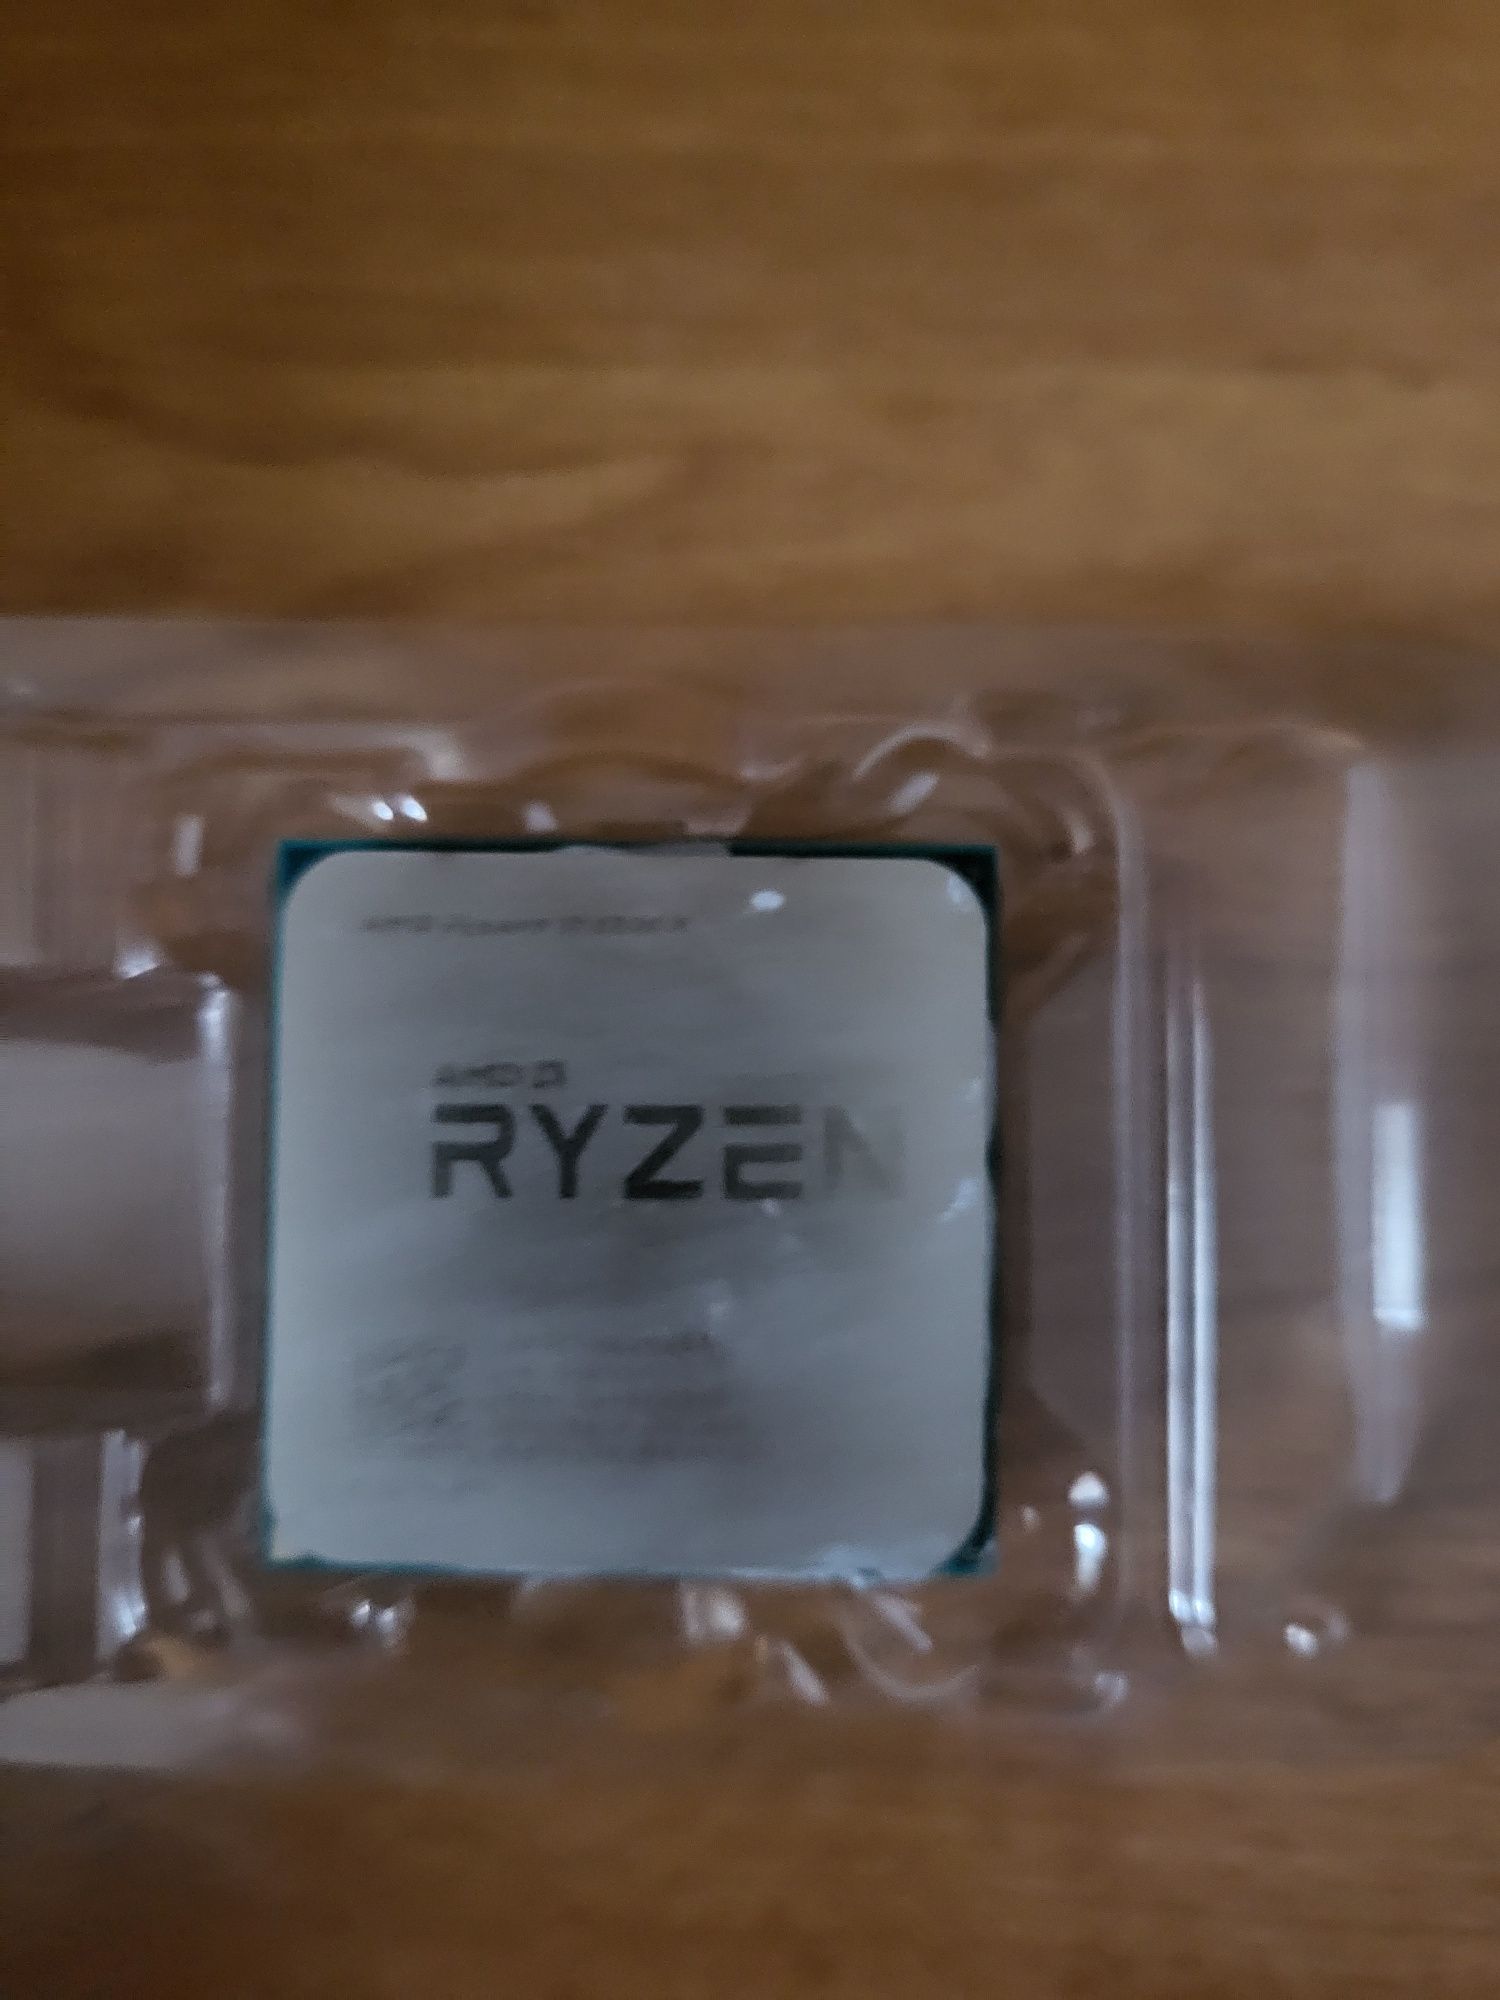 Procesor AMD Ryzen 7 1700X stan bdb